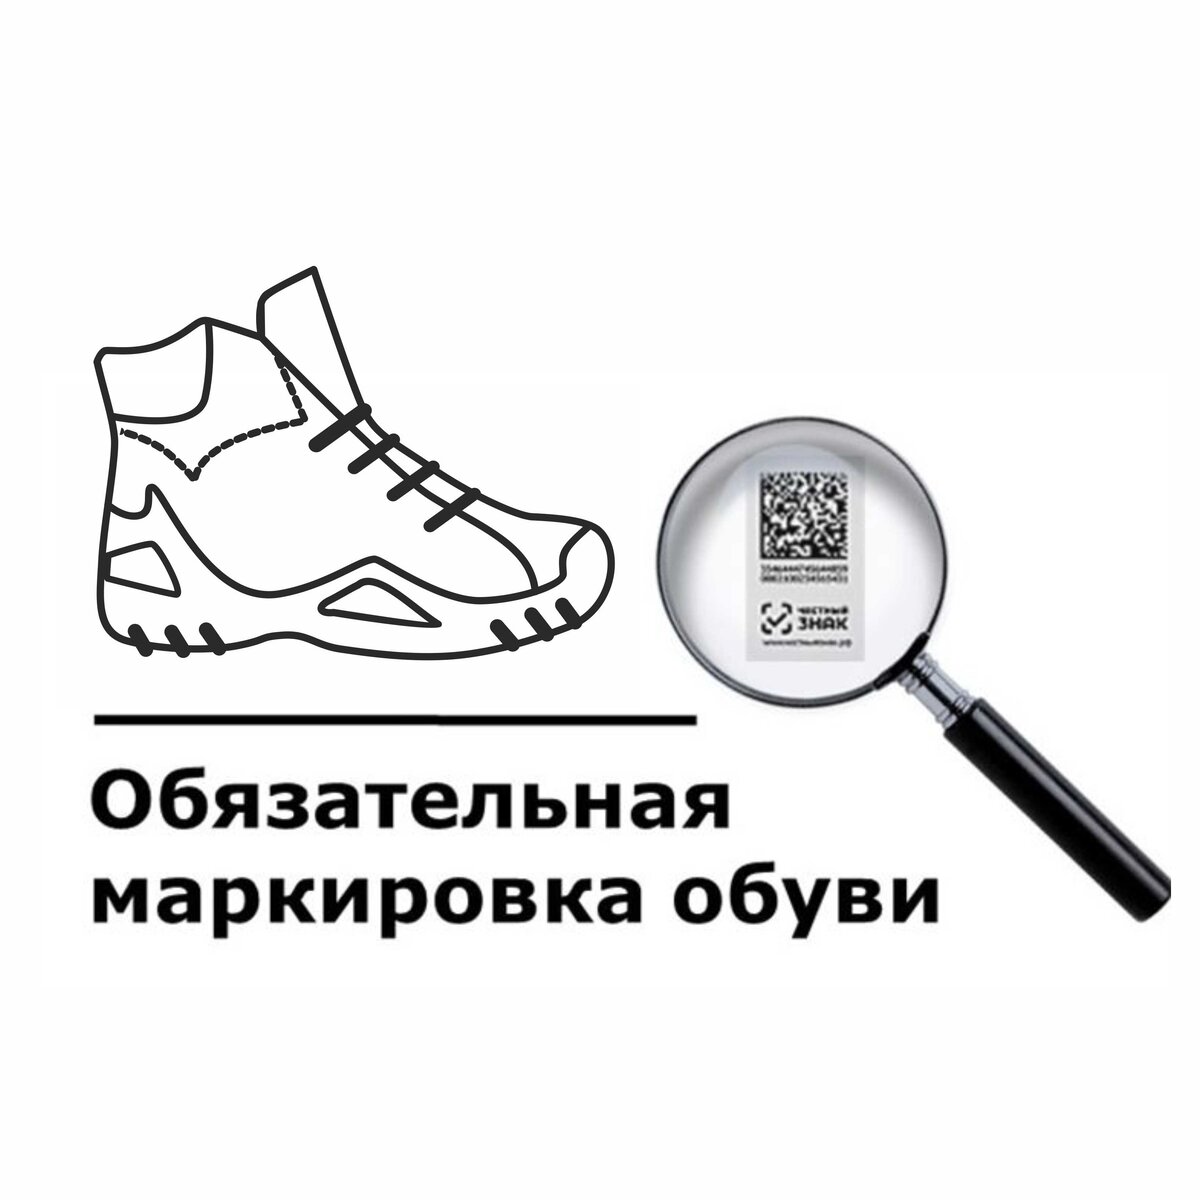 Код на обувь